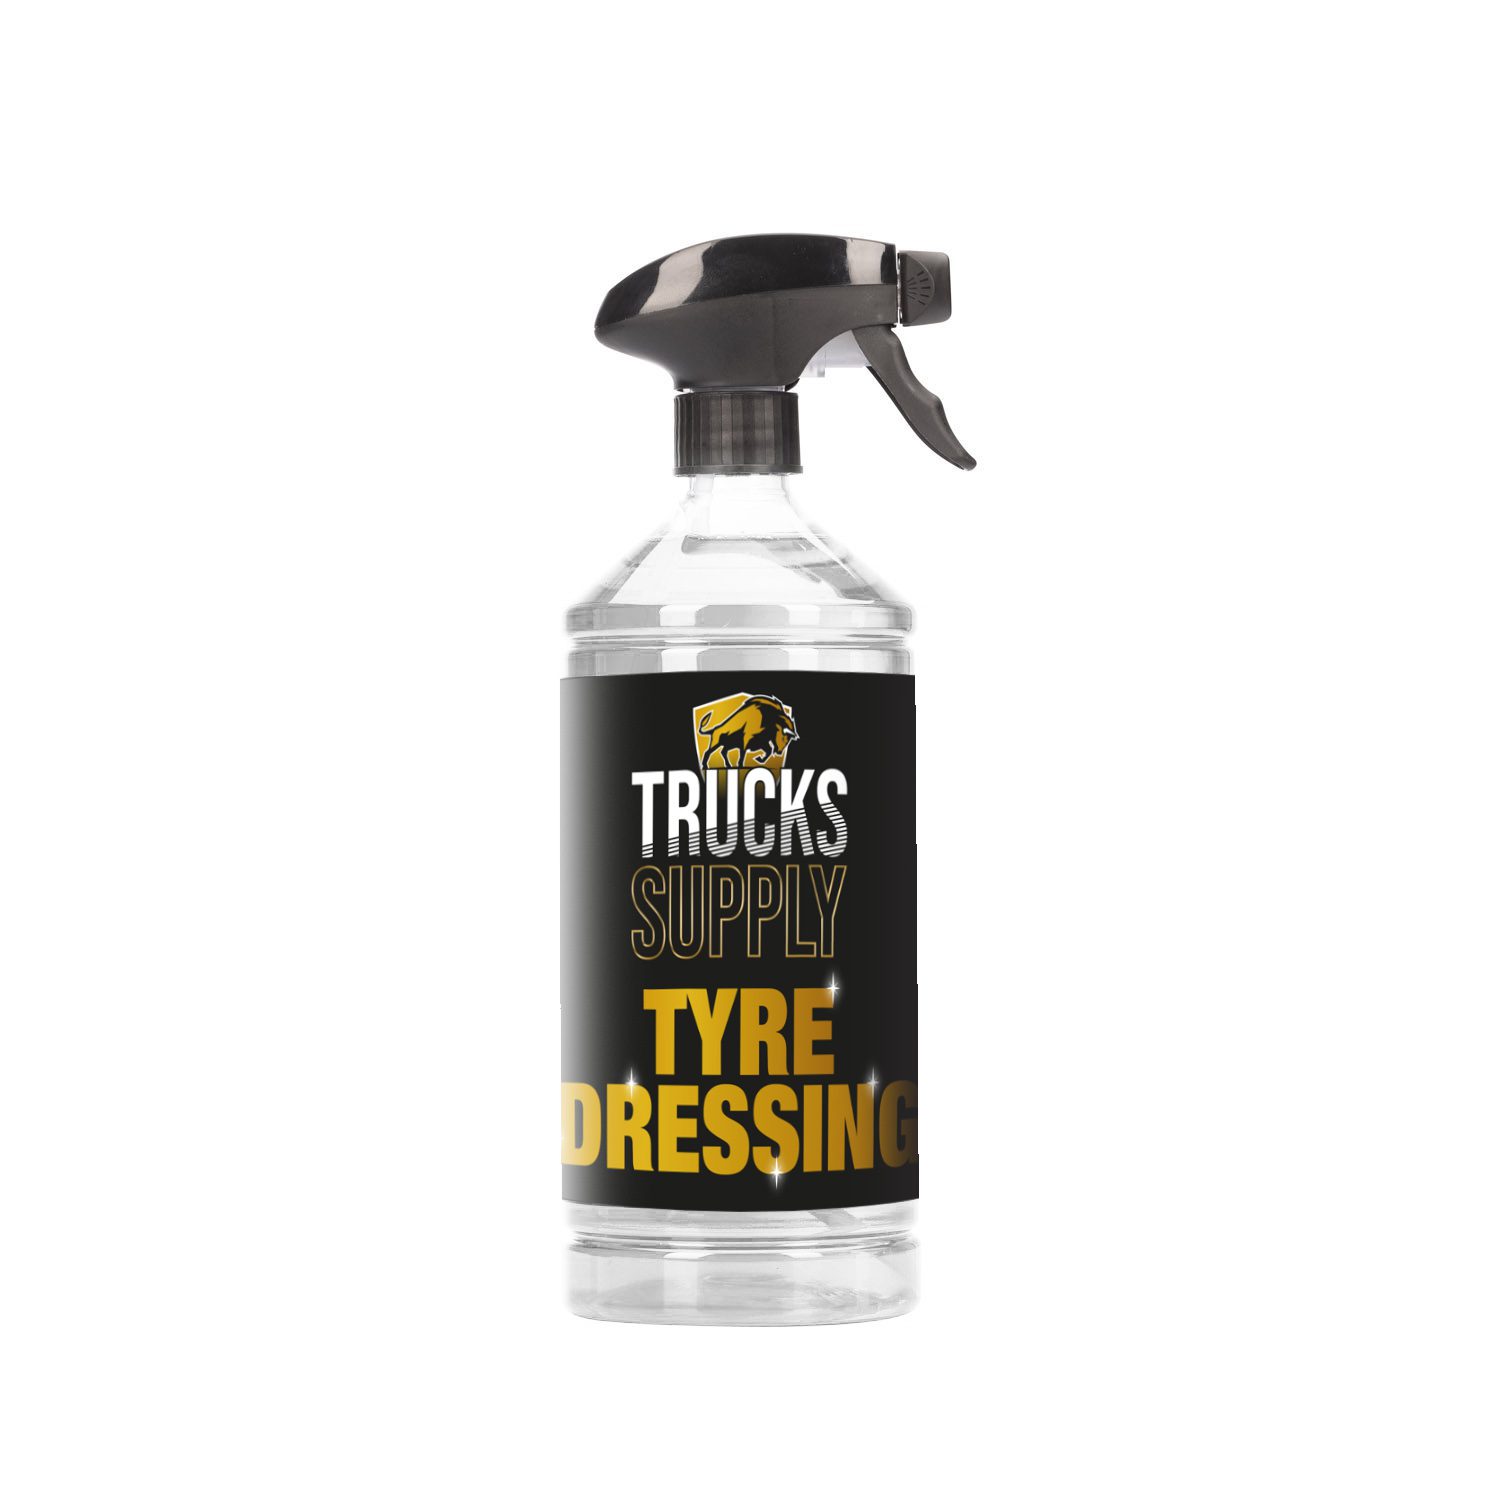 Truckssupply Tyre dressing